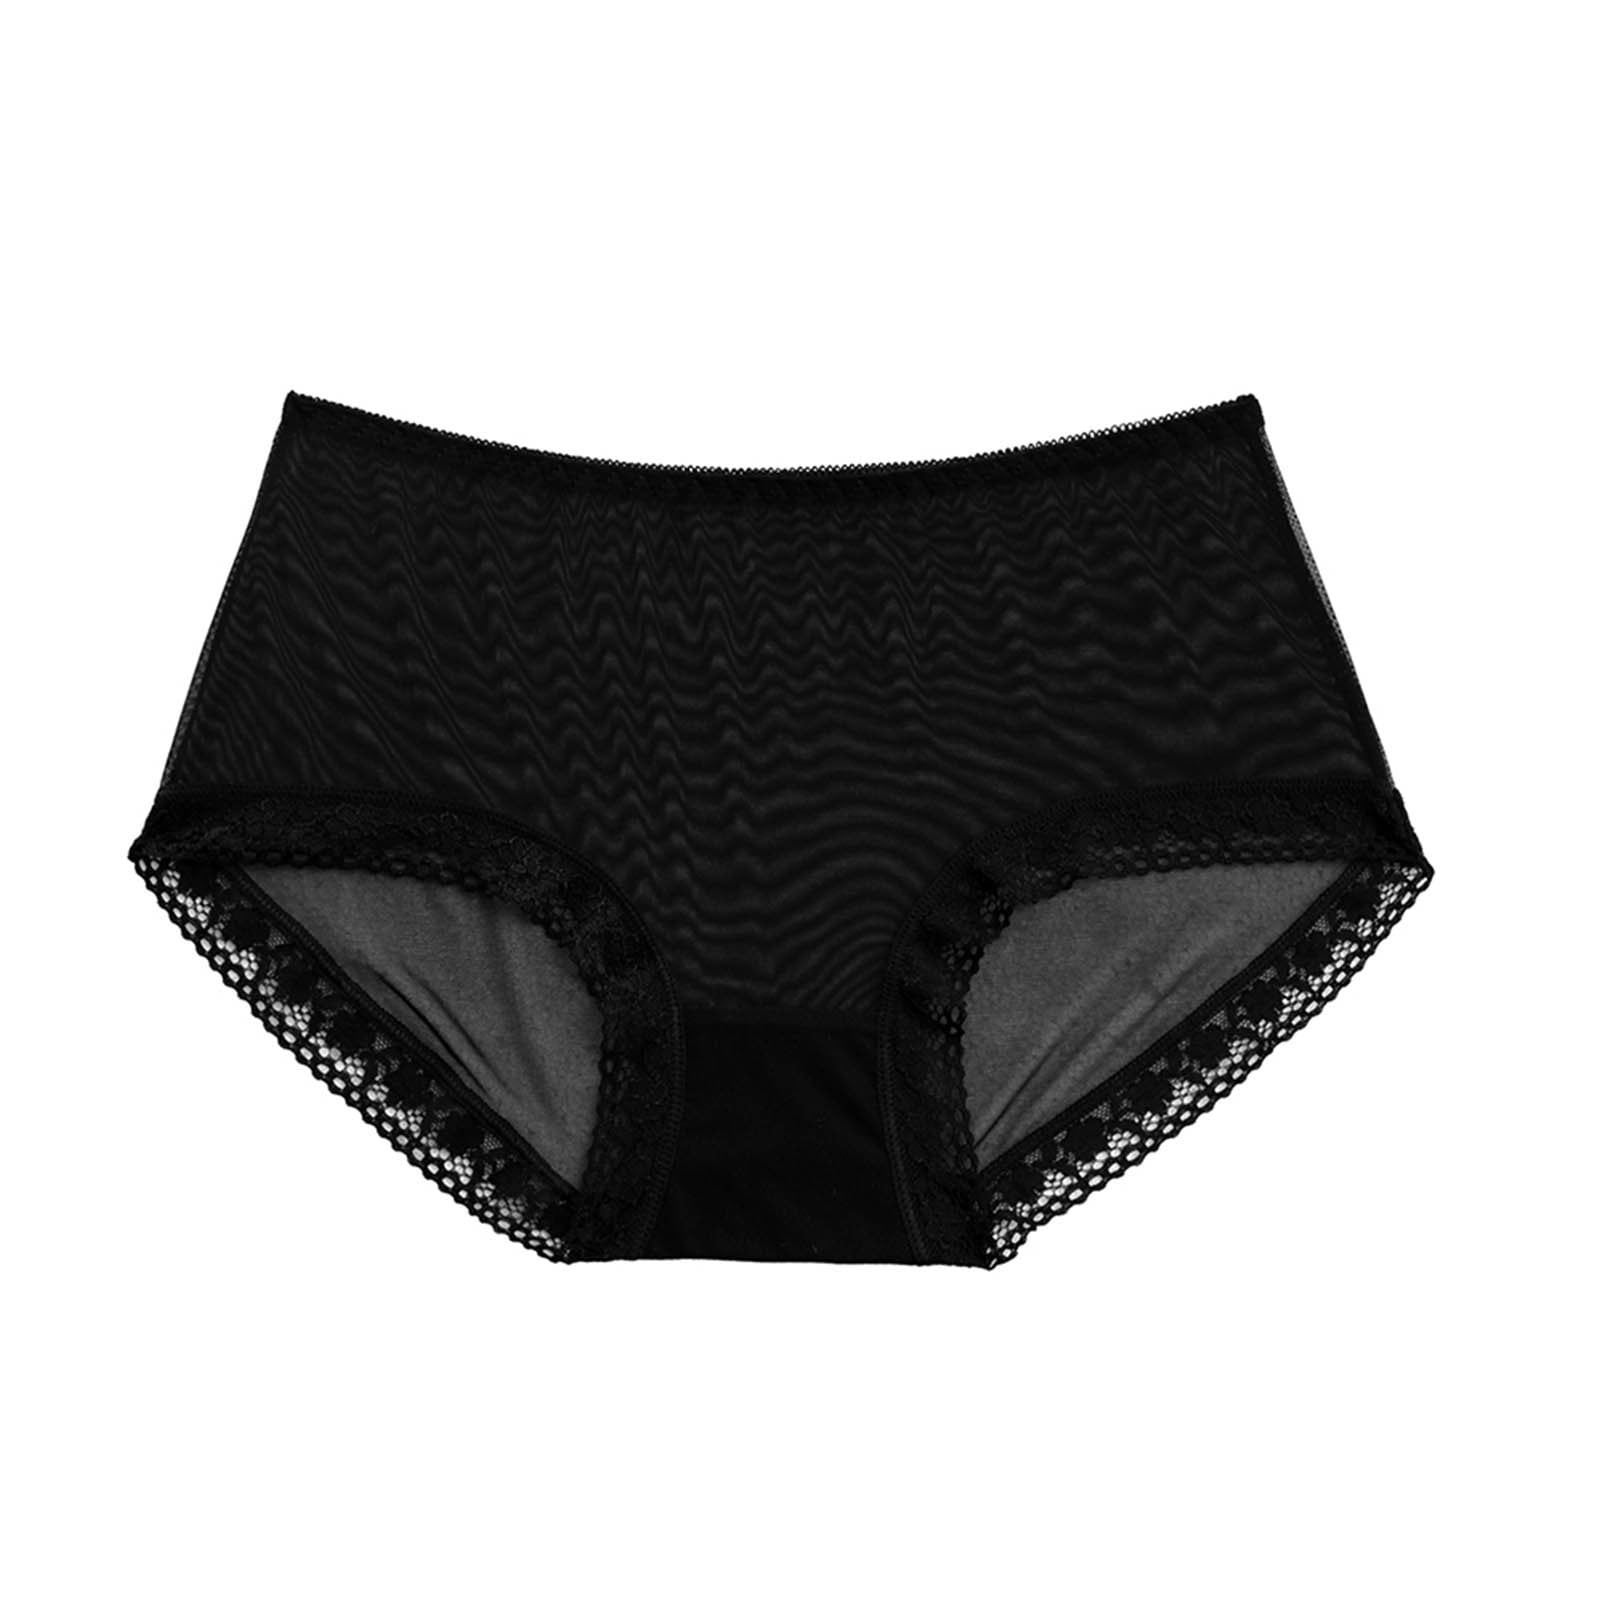 zuwimk Womens Panties ,Women's Blissful Benefits No Muffin Top Cotton  Stretch Lace Hipster Panties Black,XL